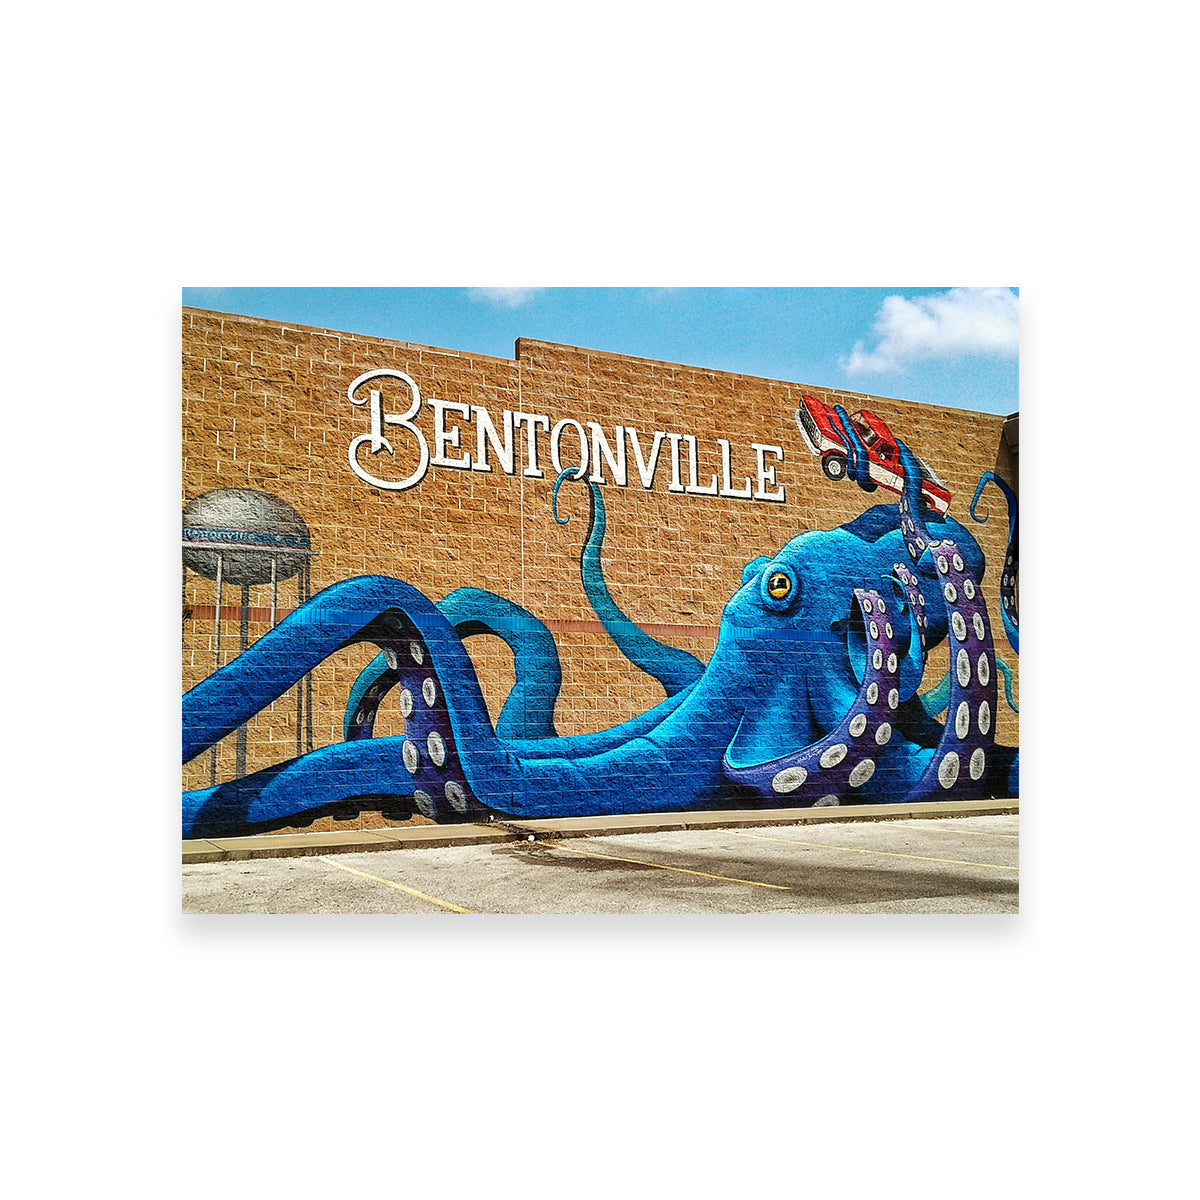 Bentonville Blue Octopus Mural